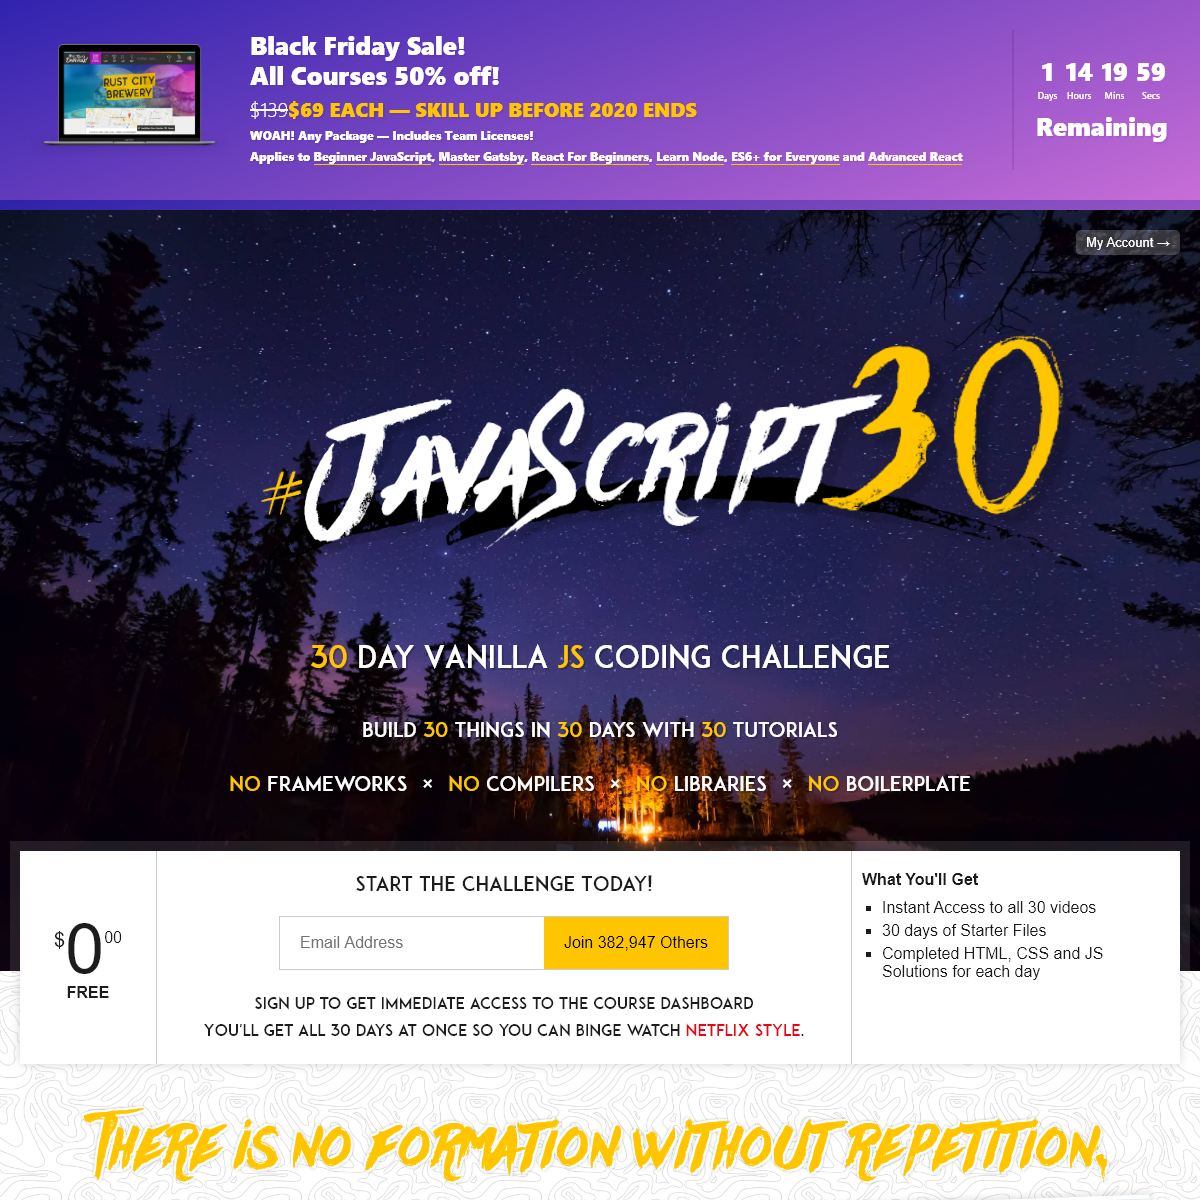 A complete backup of javascript30.com